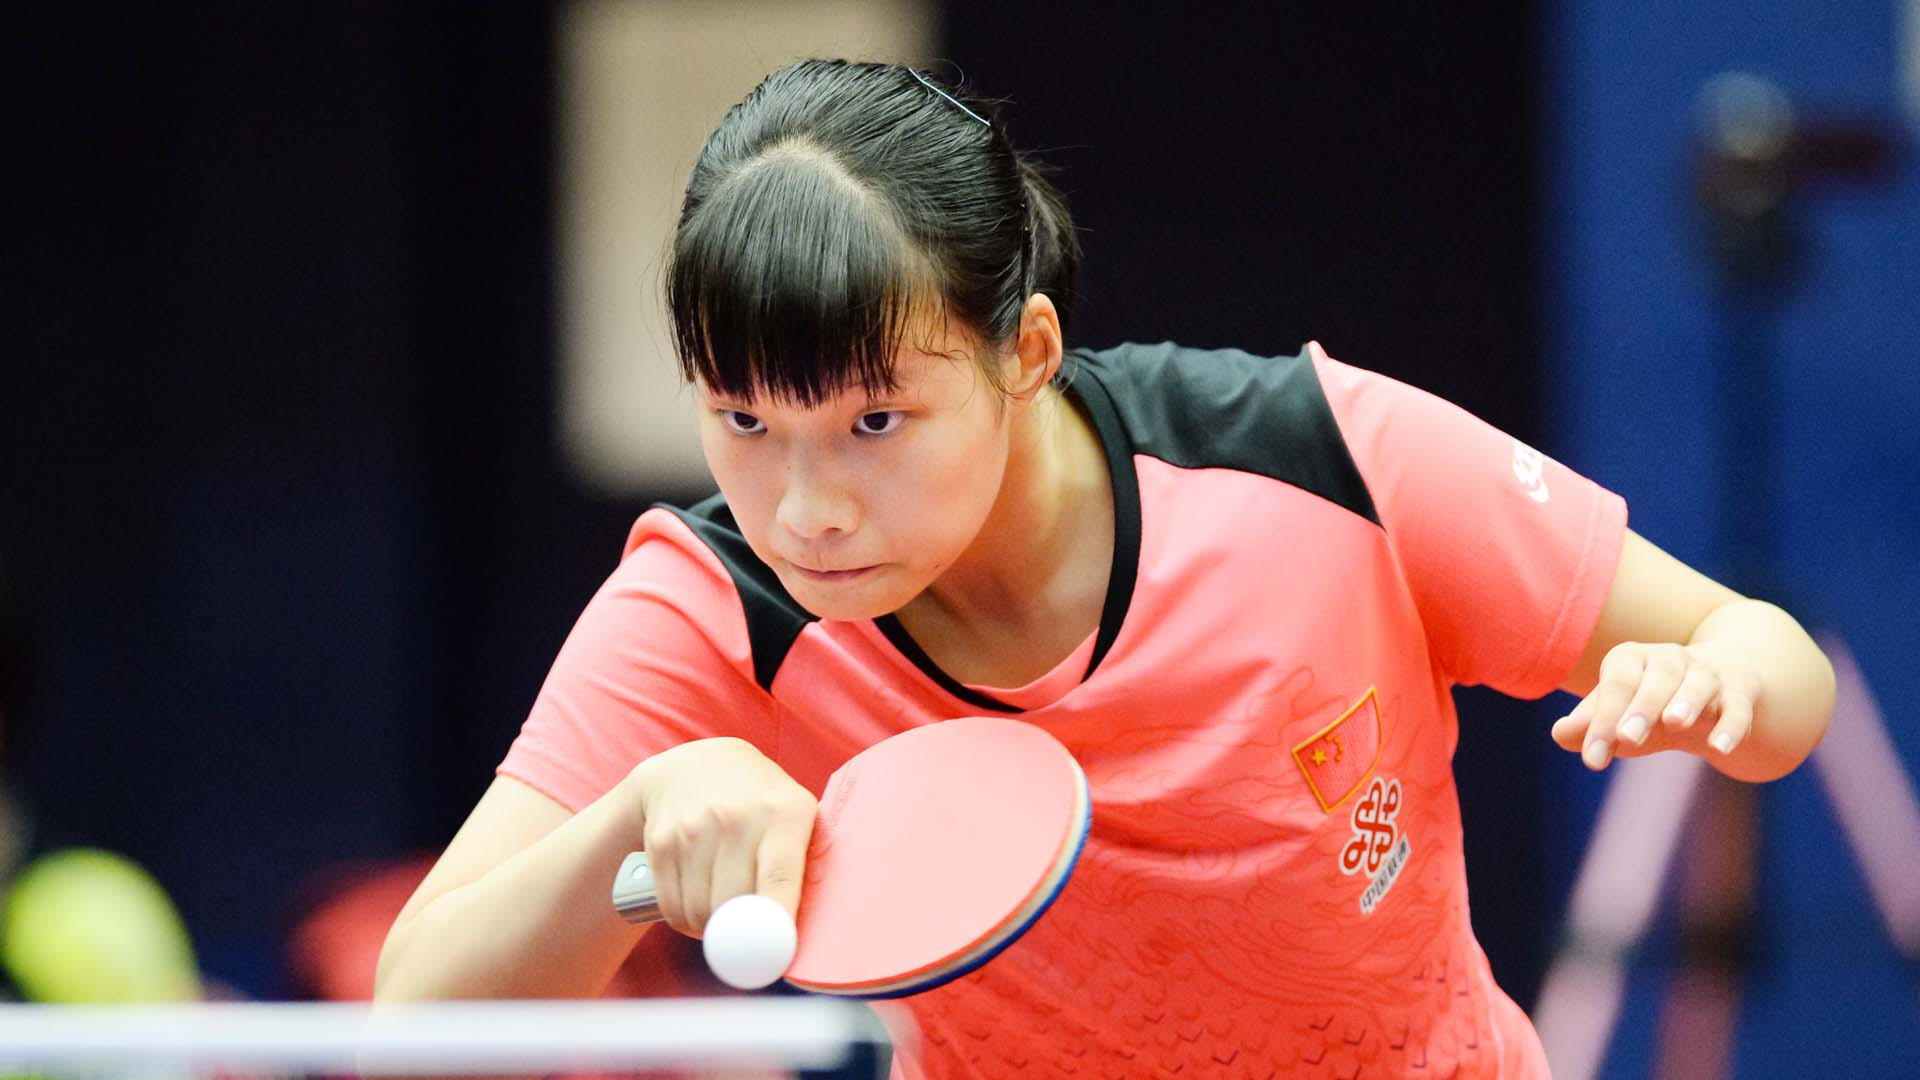 Top seeds in girls' singles event progress to semi-final at ITTF World Junior Championships